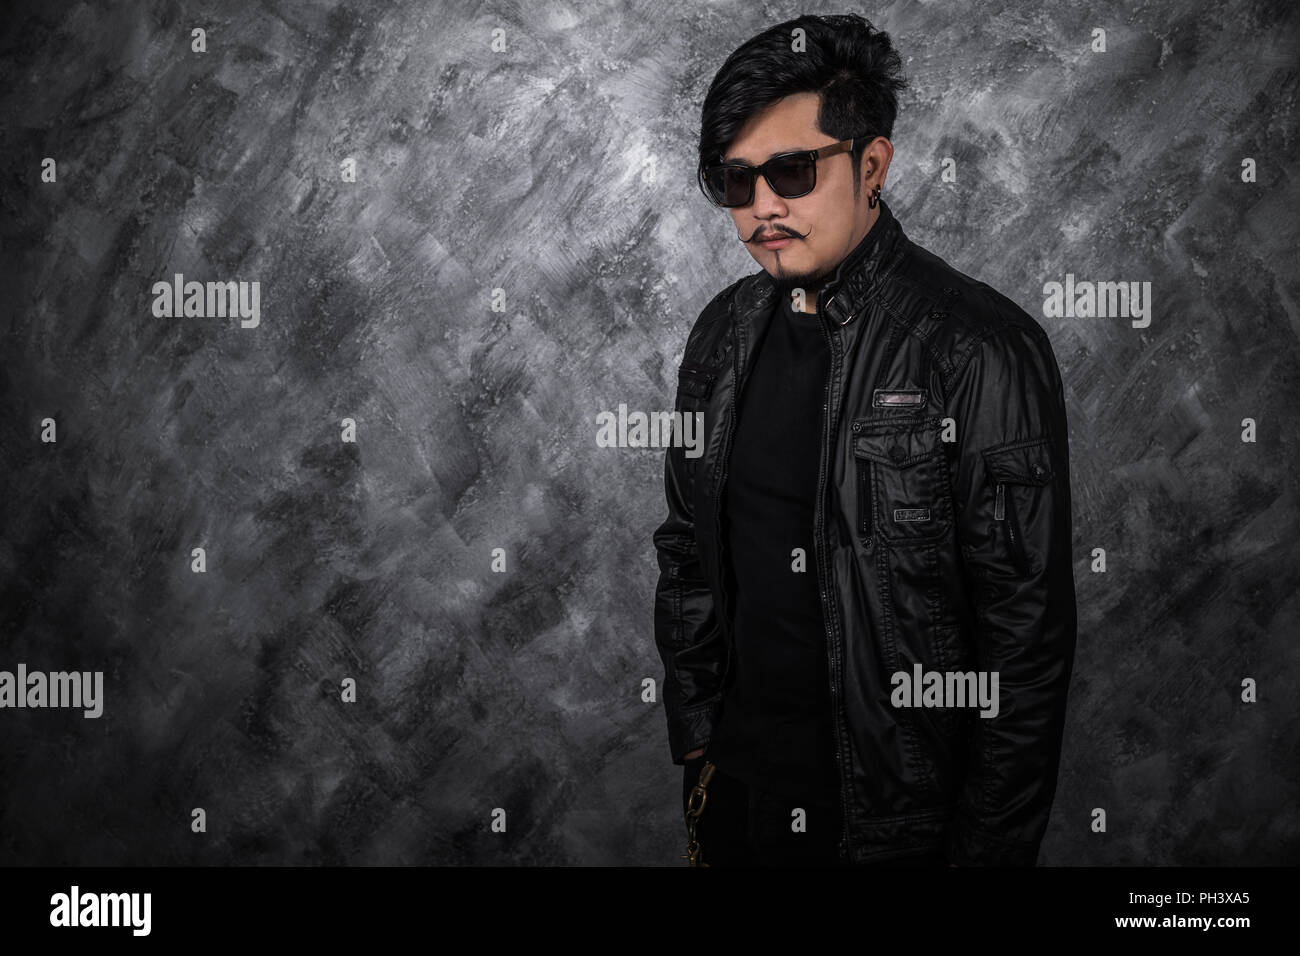 portrait of biker man in black leather jacket Stock Photo